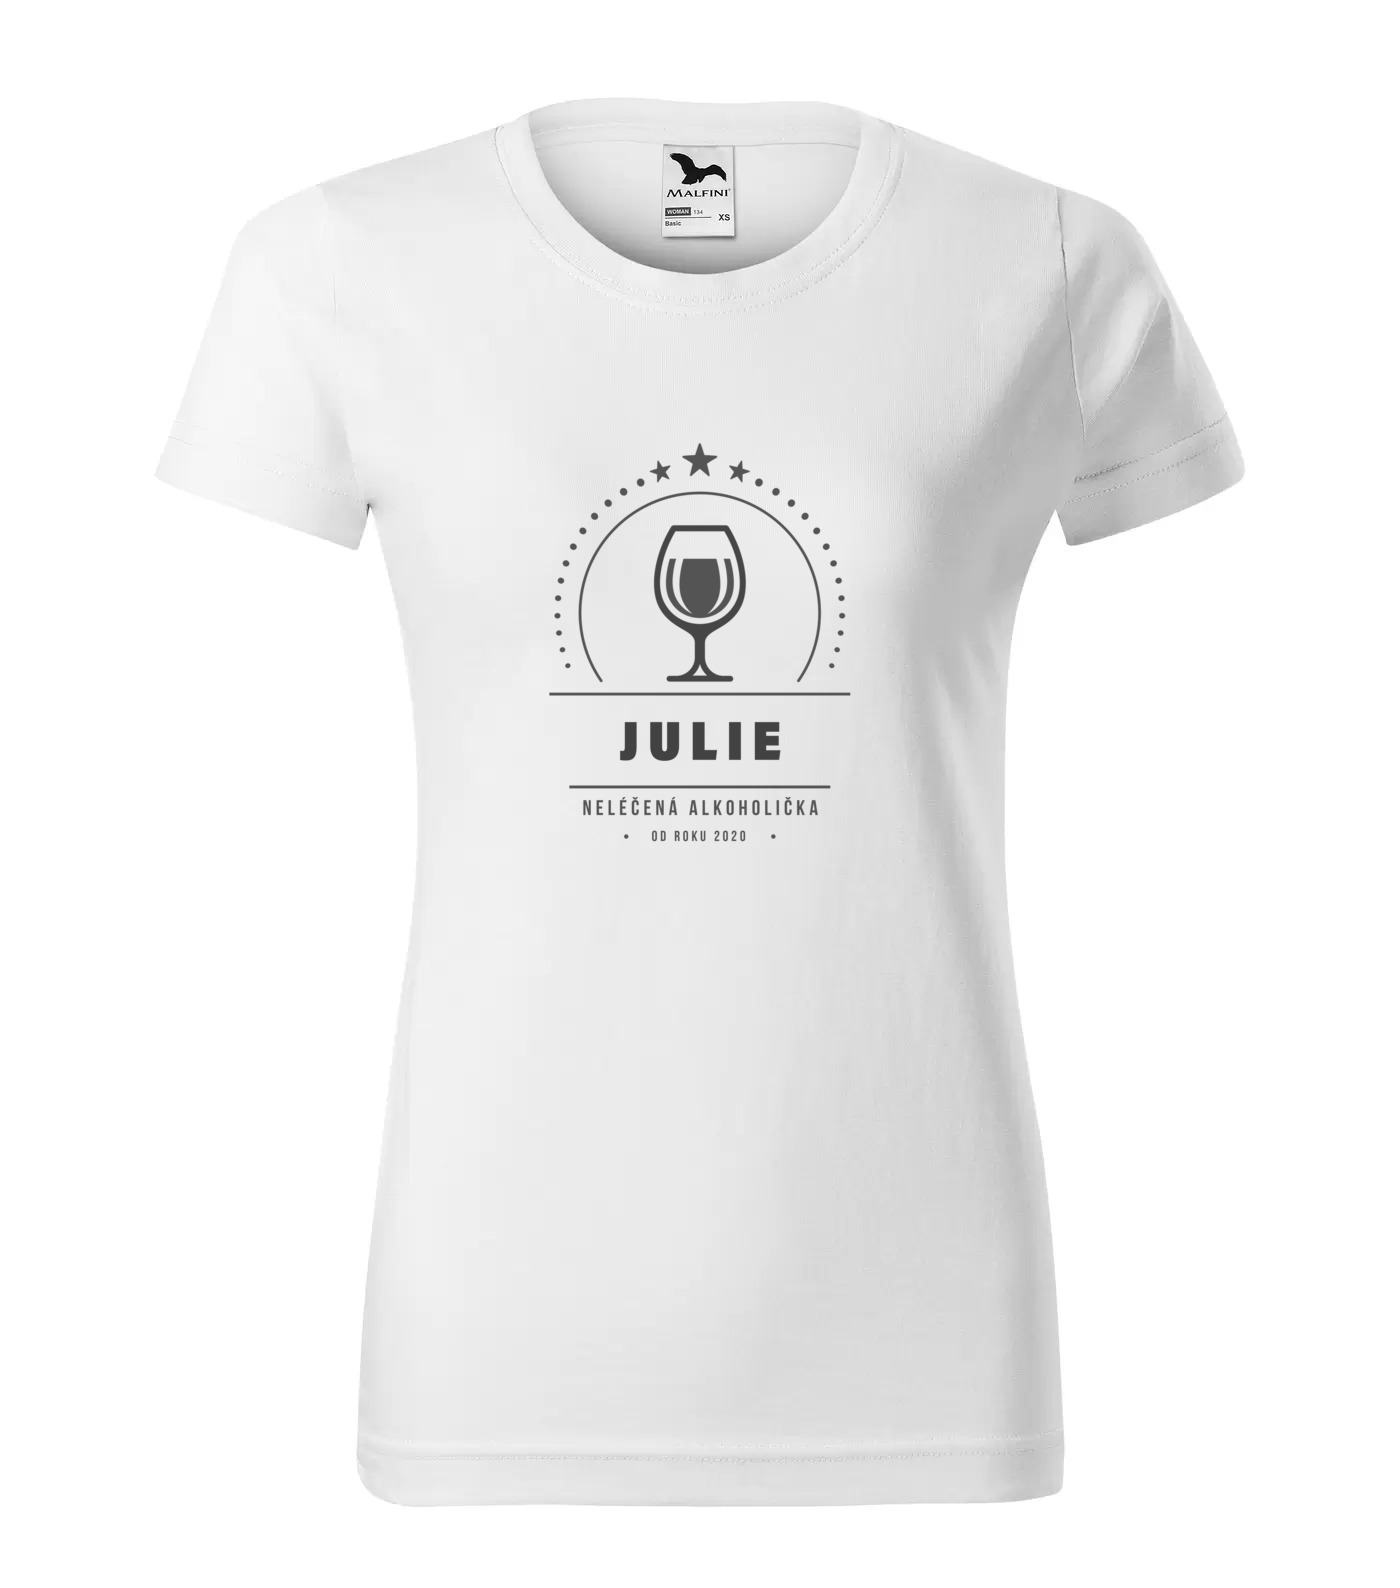 Tričko Alkoholička Julie